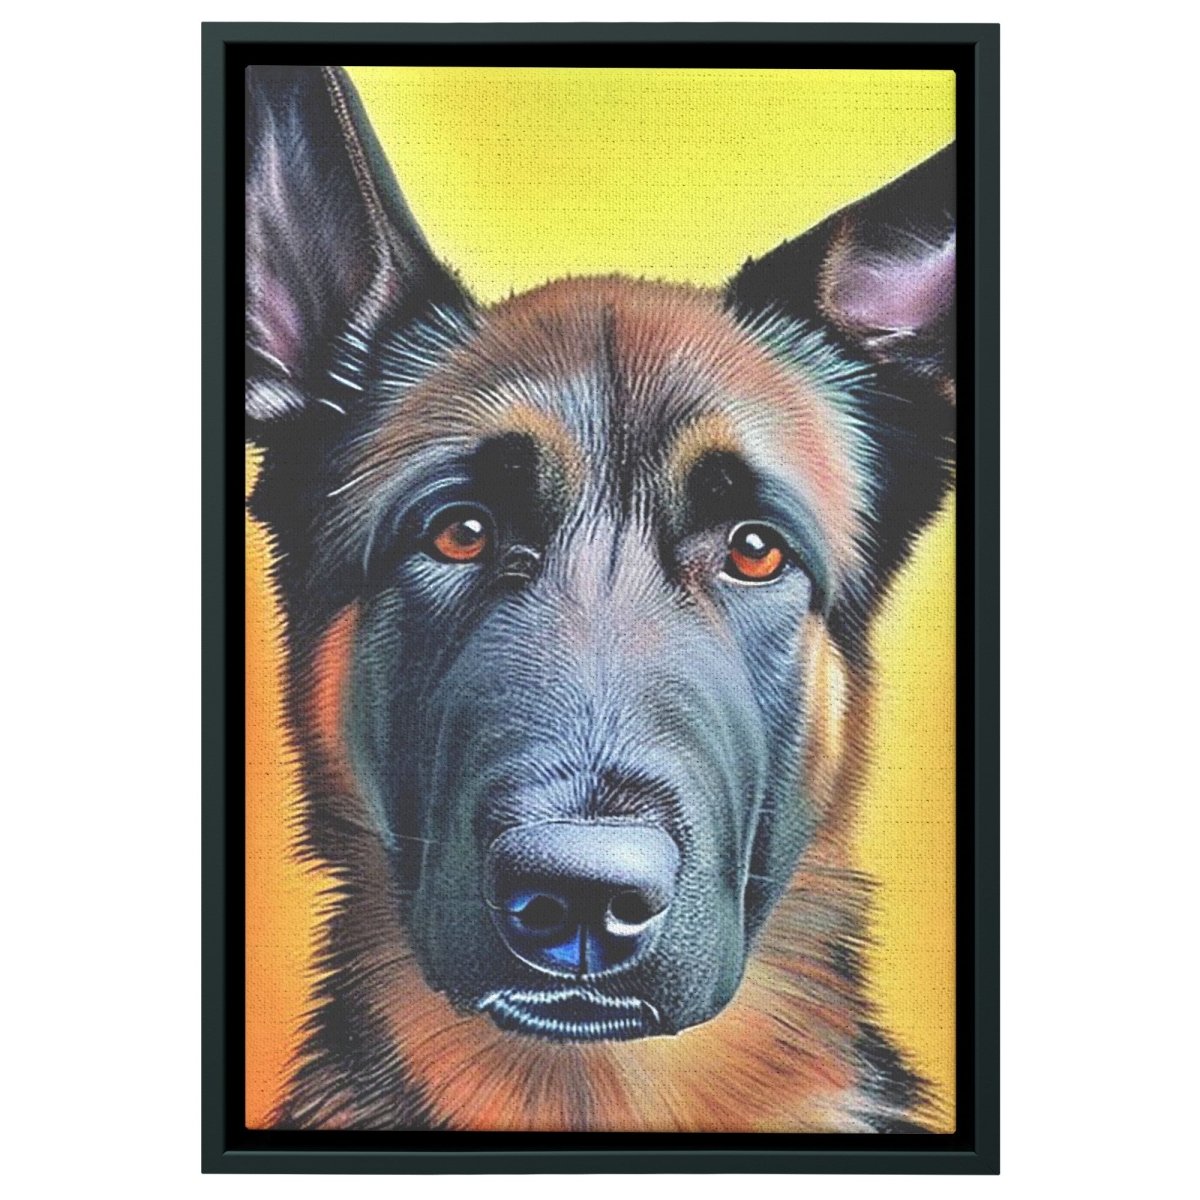 That Nose! German Shepherd Oil on Framed Gallery Canvas - Best Friends Art